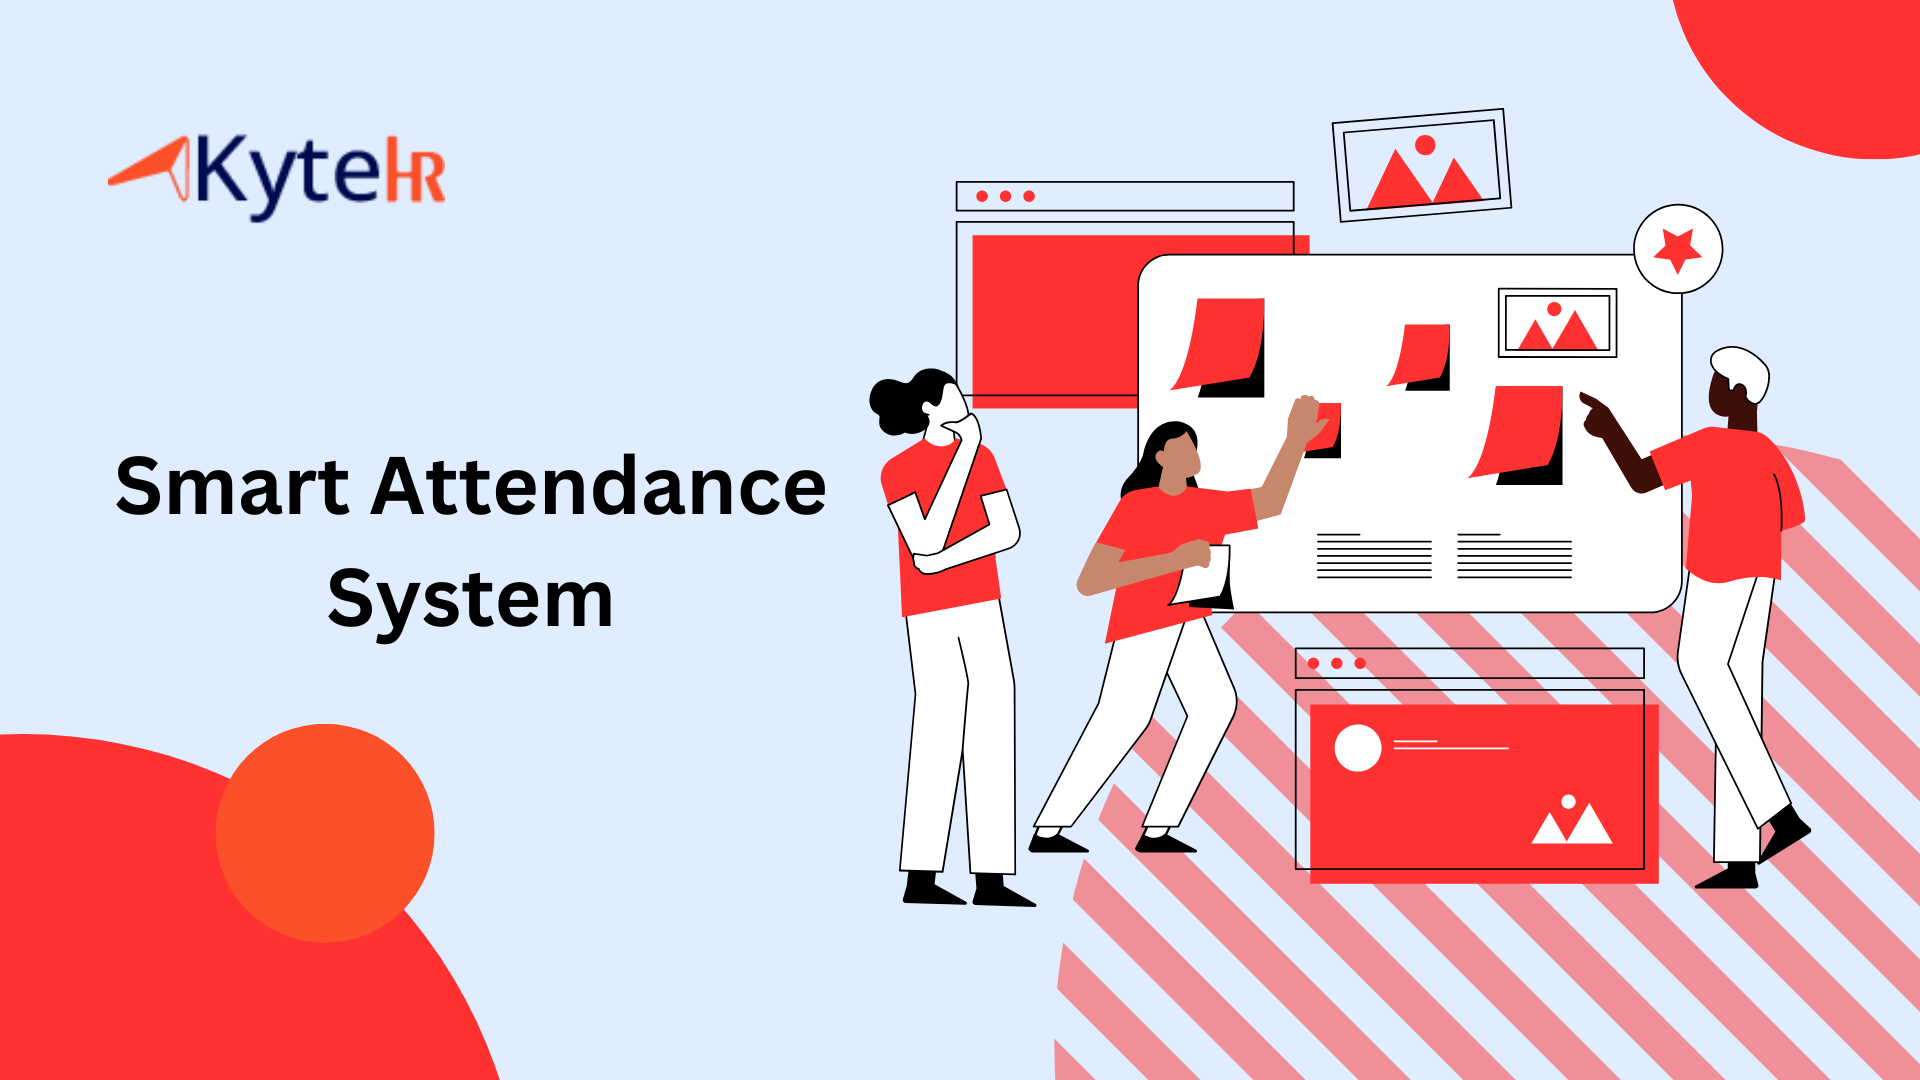 Smart Attendance System KyteHr